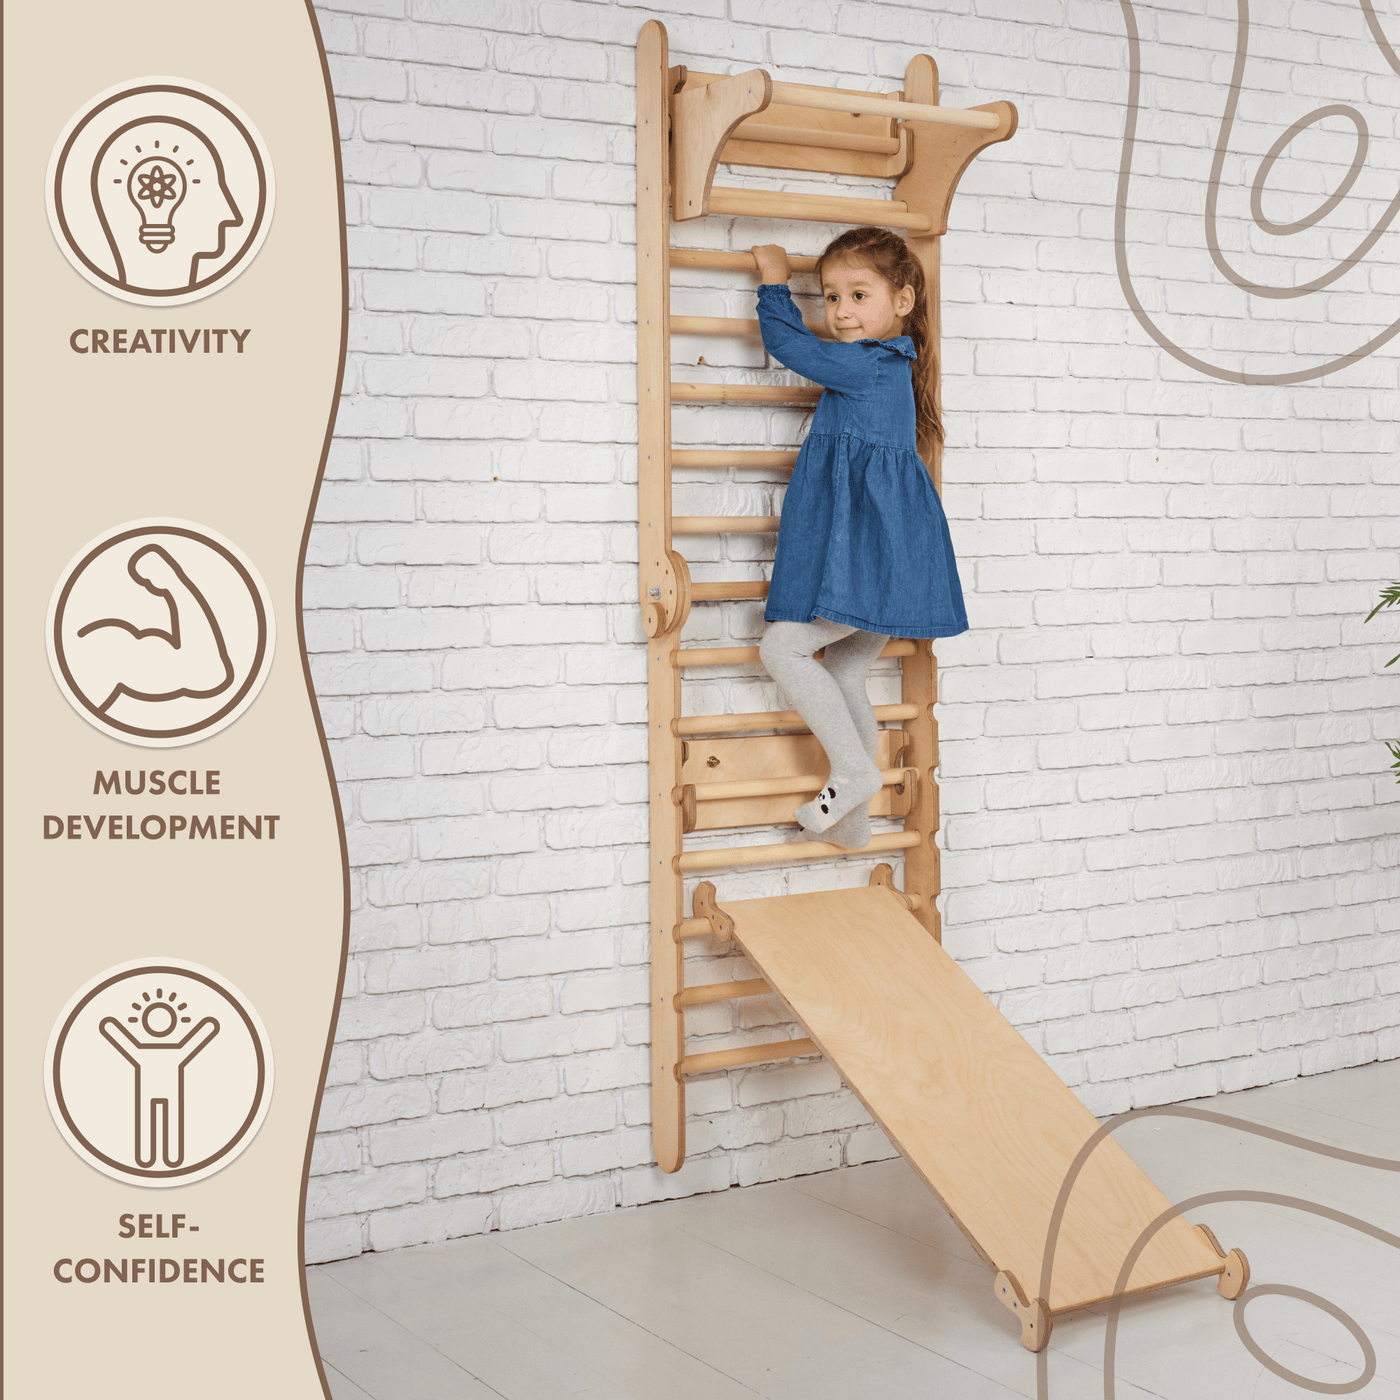 4in1 Climbing Set: Wooden Swedish Wall + Swing Set + Slide Board + Triangle Ladder Goodevas